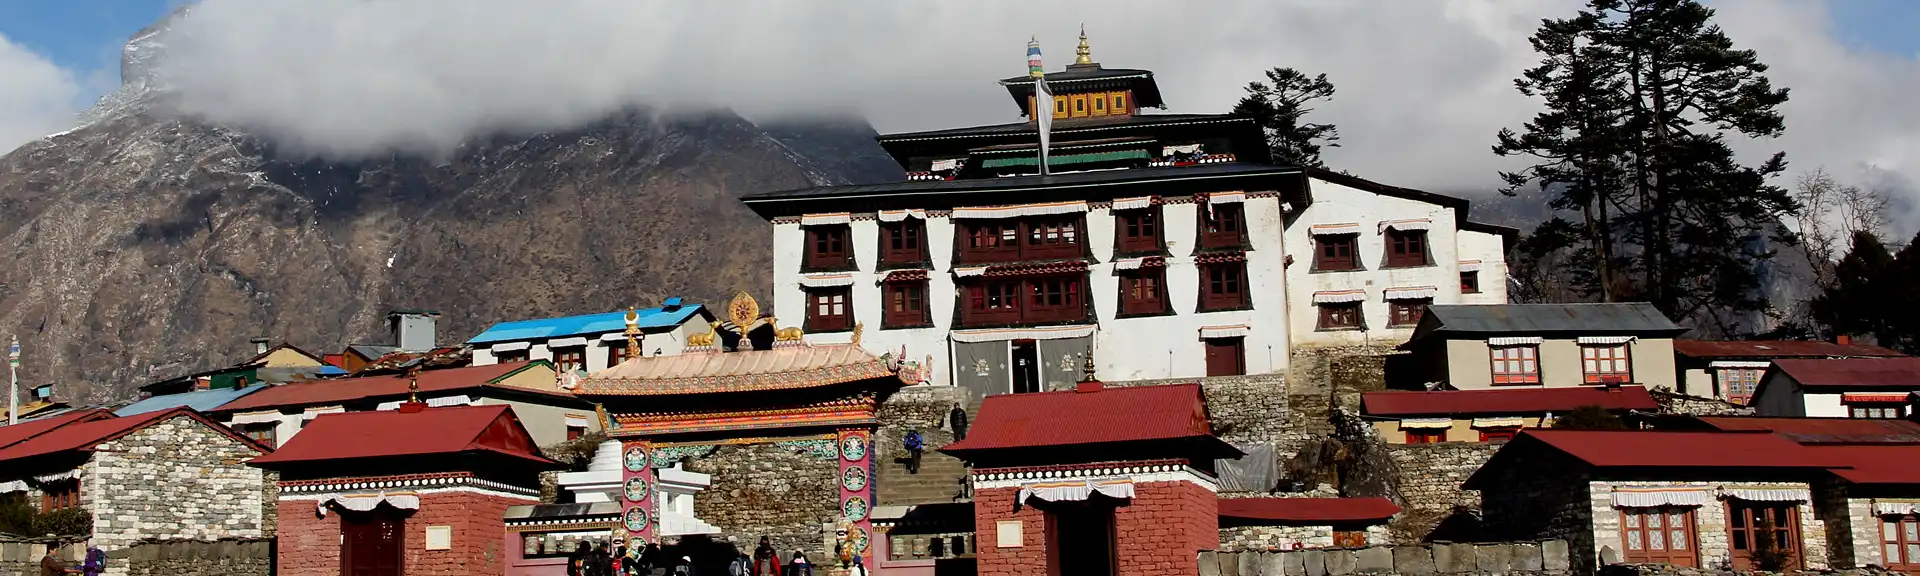 Tengboche Monastery: The oldest monastery in the Khumbu Region of Nepal